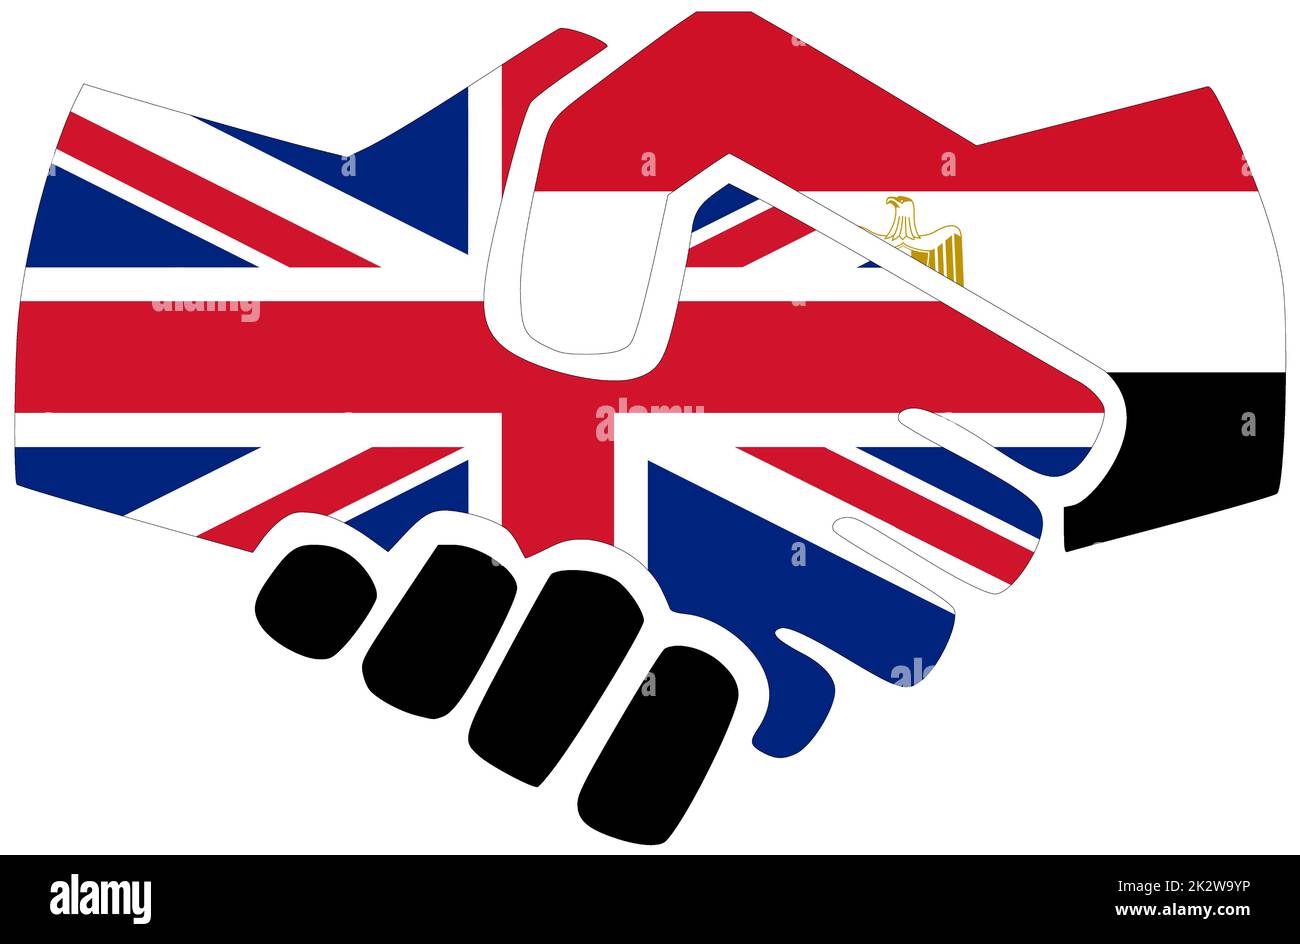 UK - Egypt : Handshake, symbol of agreement or friendship Stock Photo